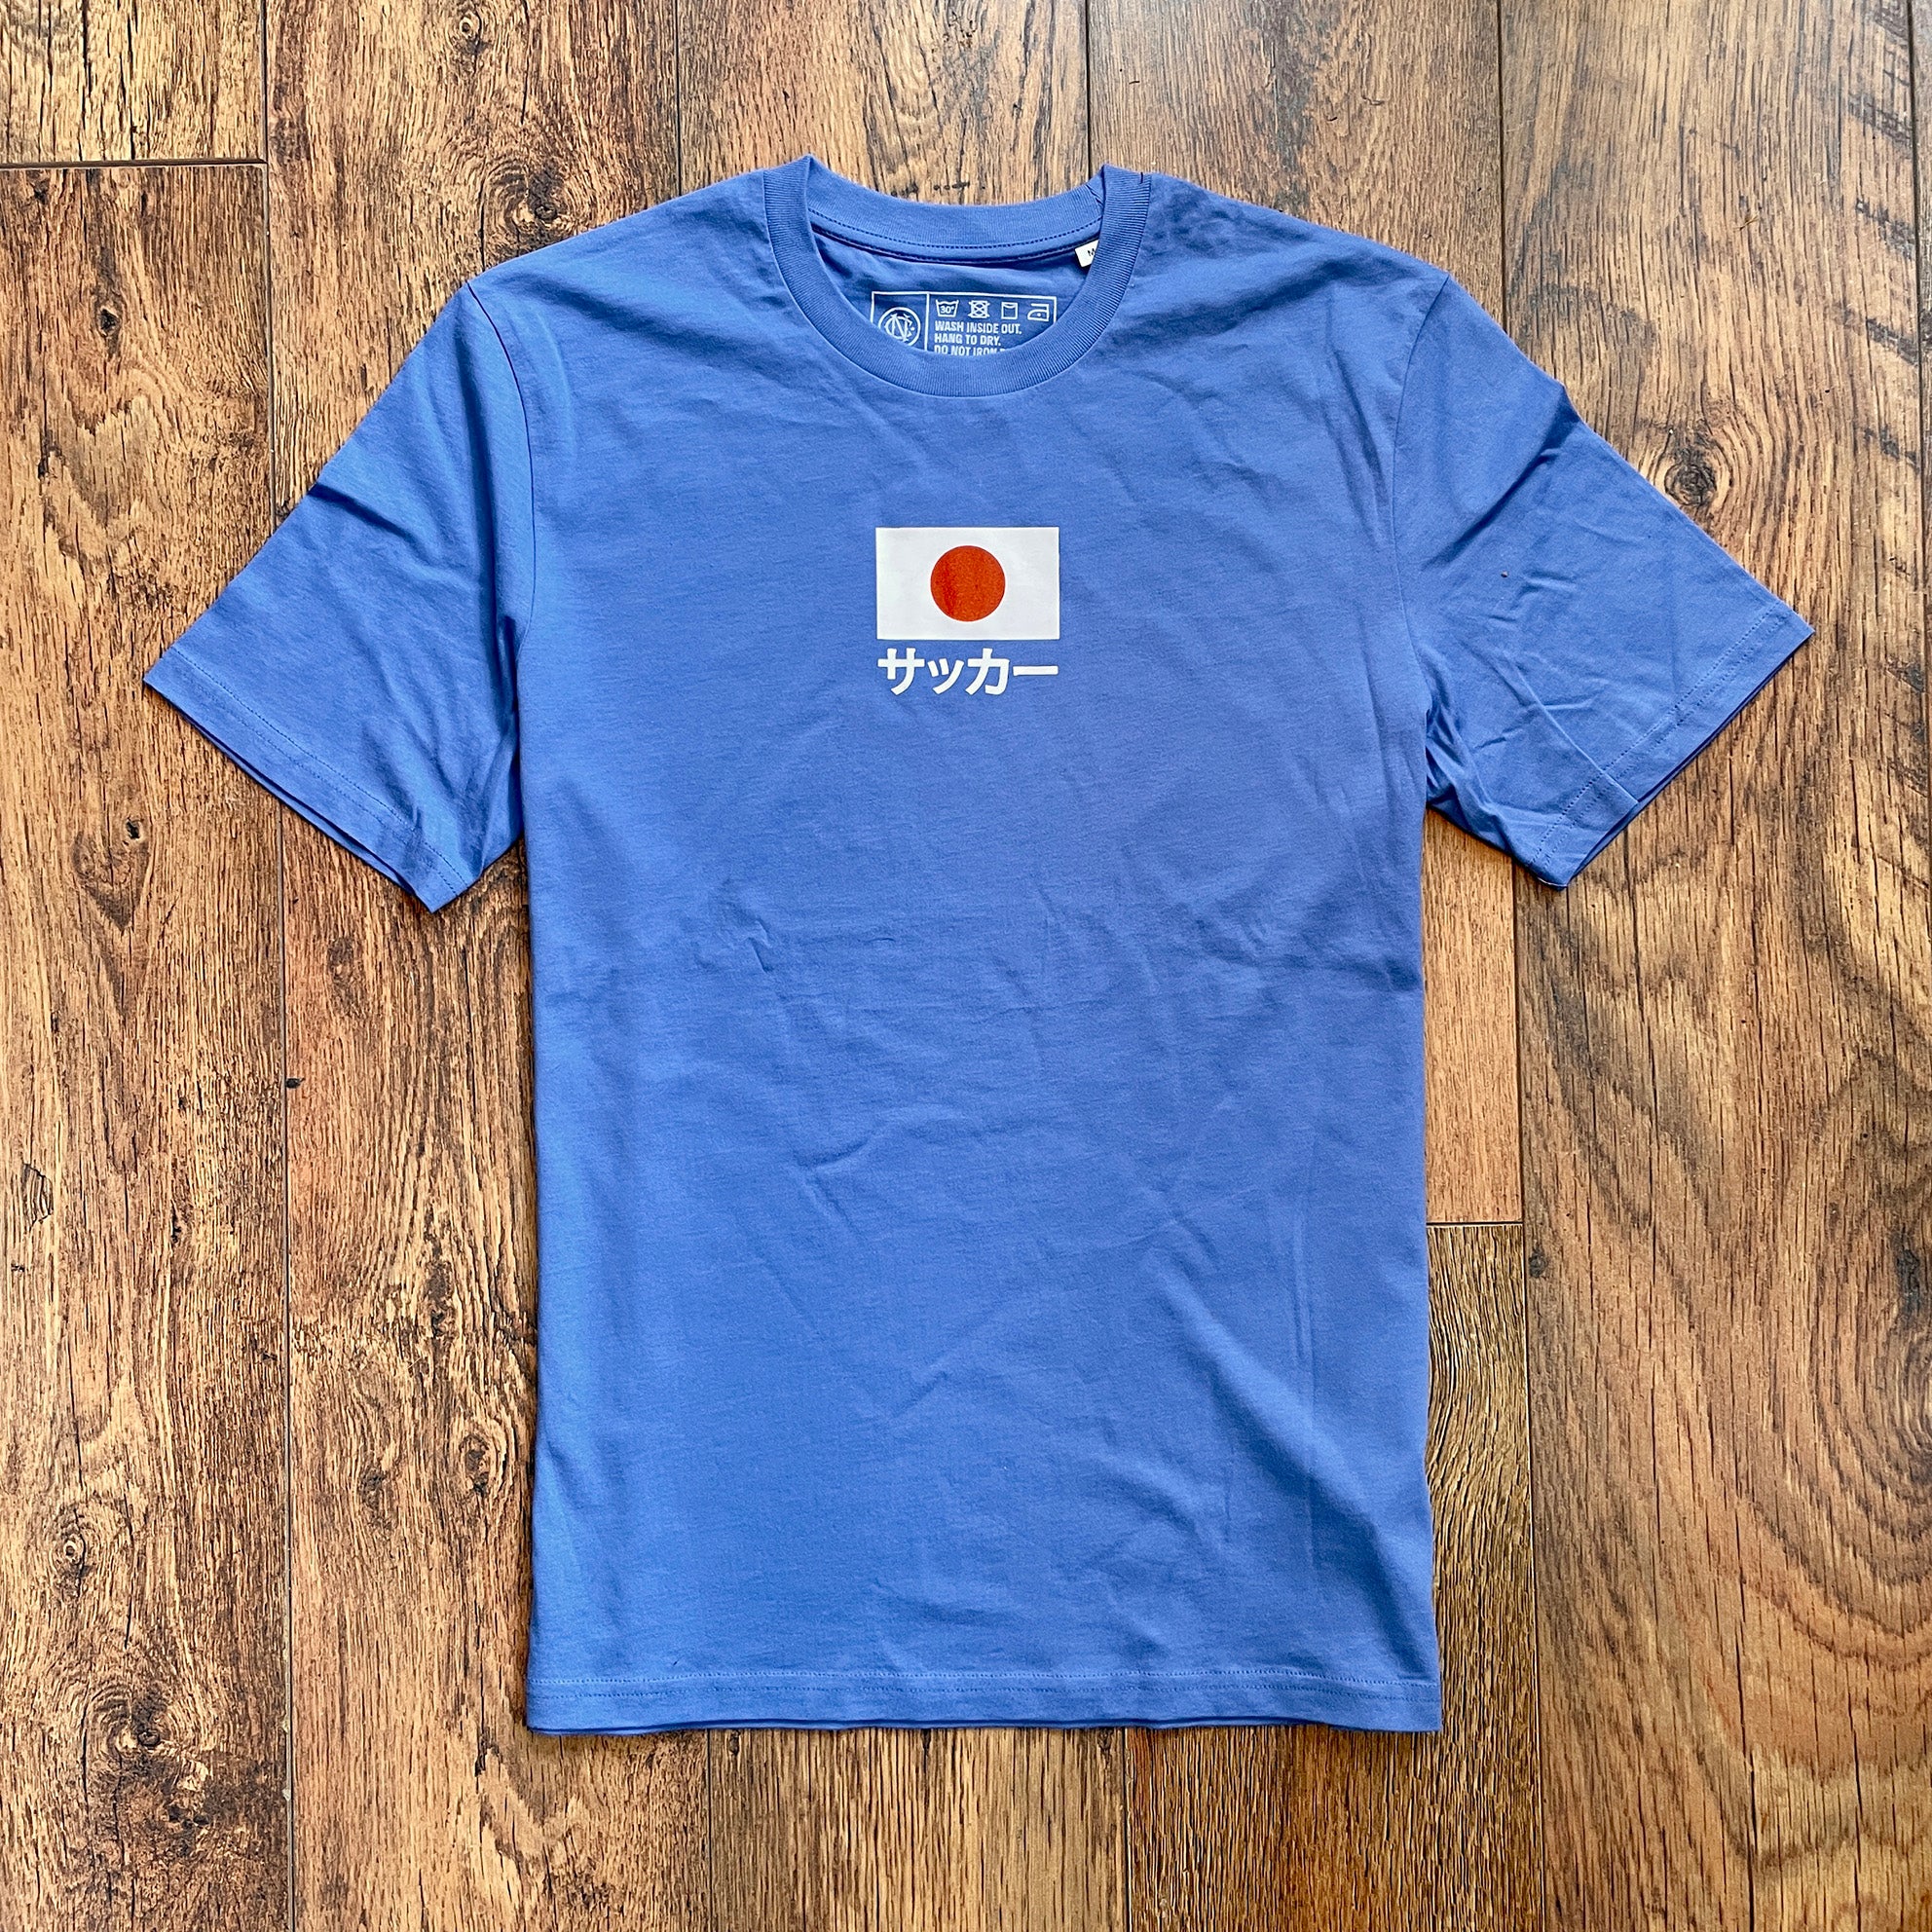 Japan 'Football' T-shirt